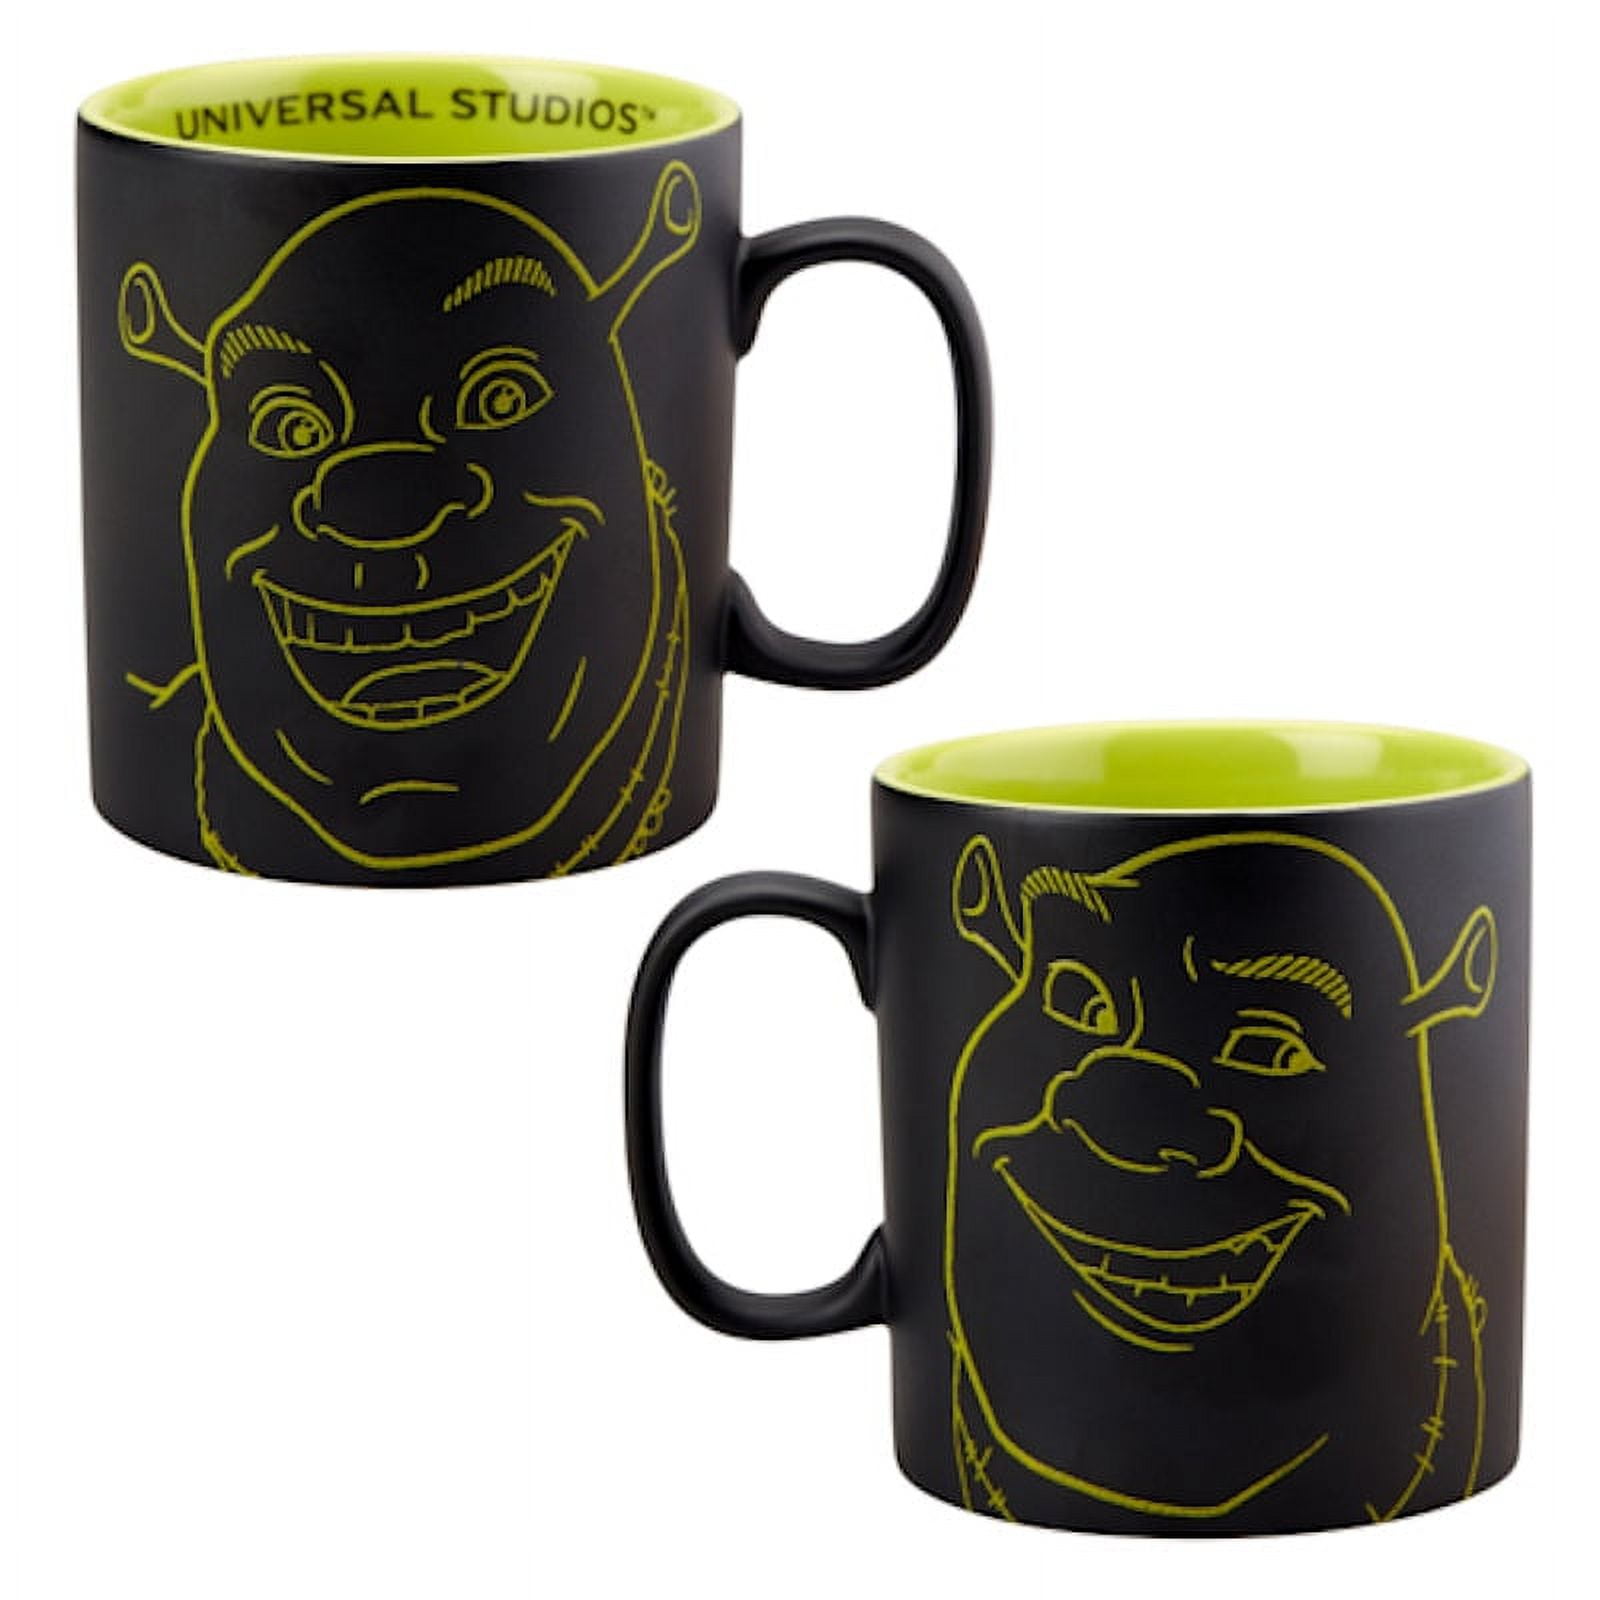 Big Face Coffee Mug